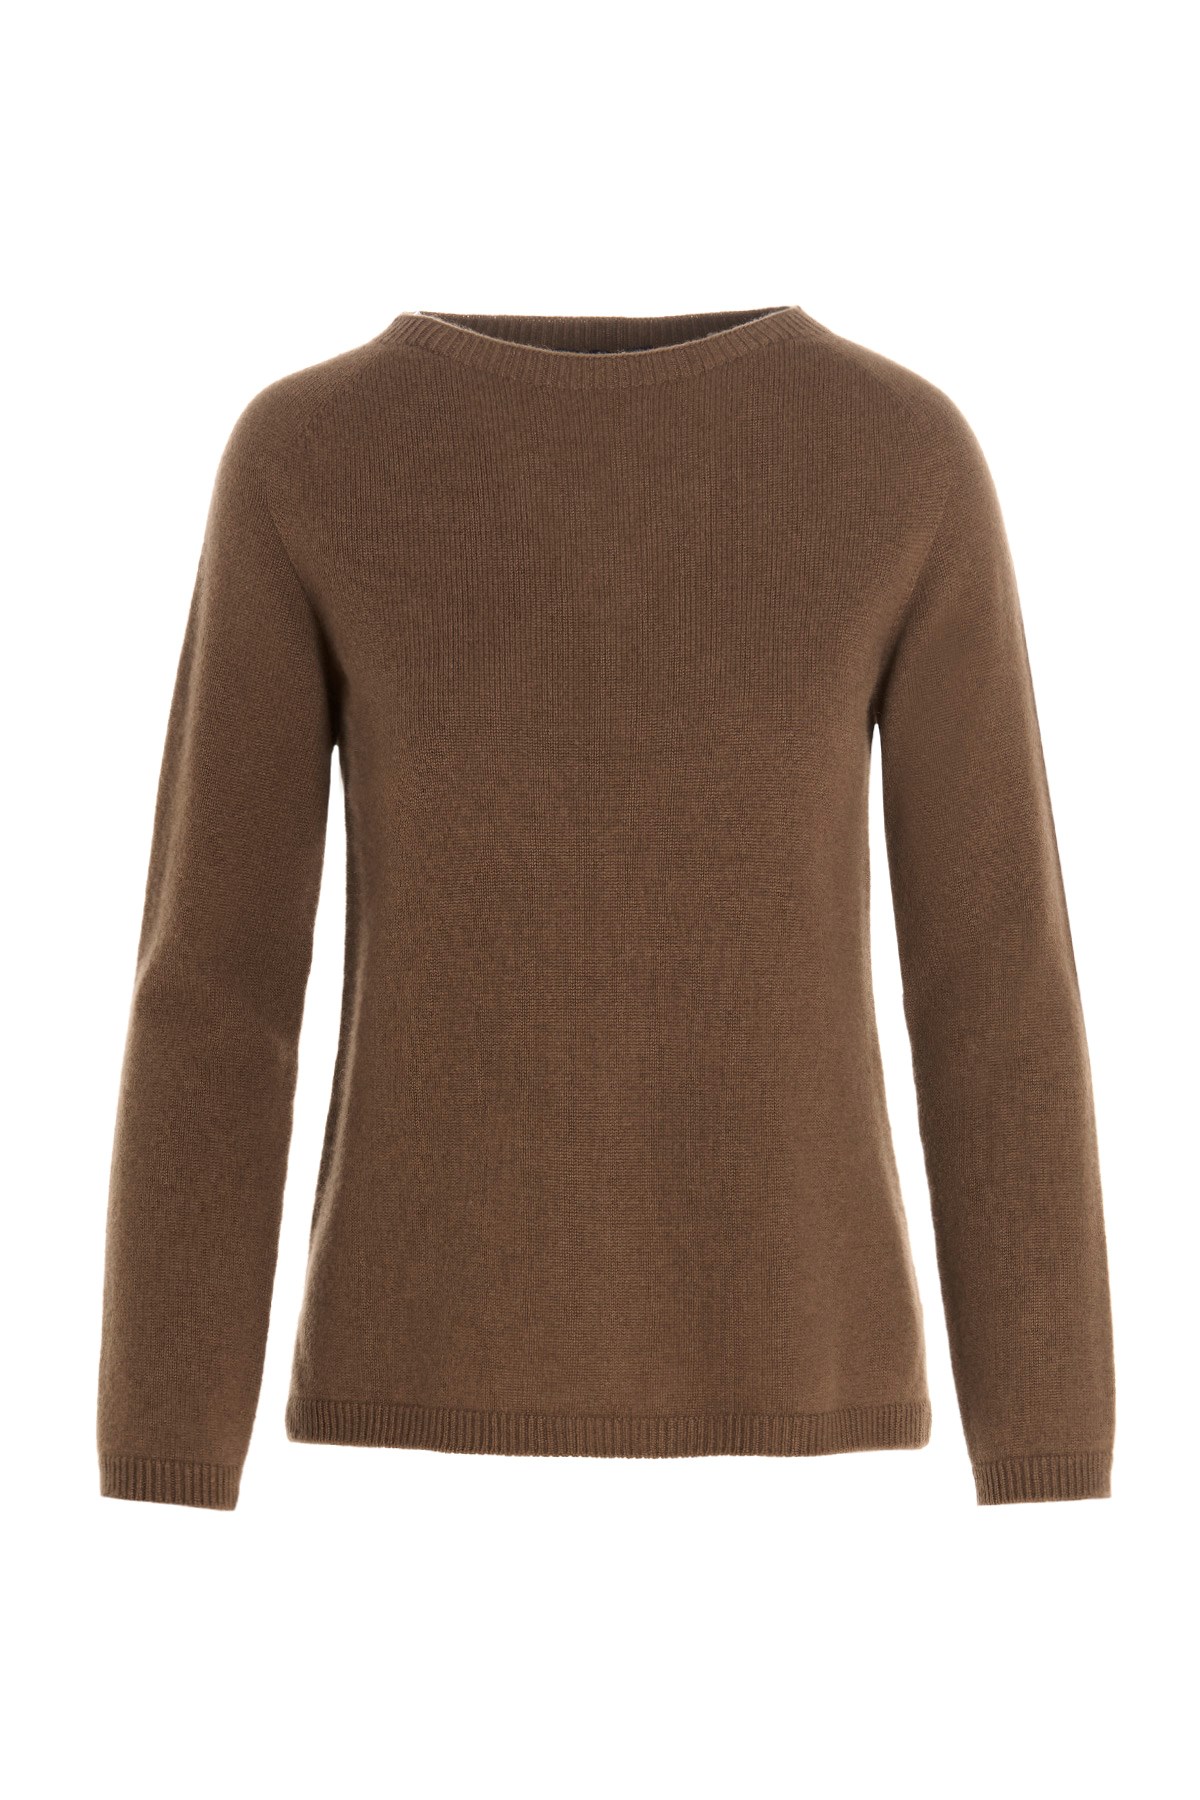 MAX MARA 'S 'Giose’ Sweater